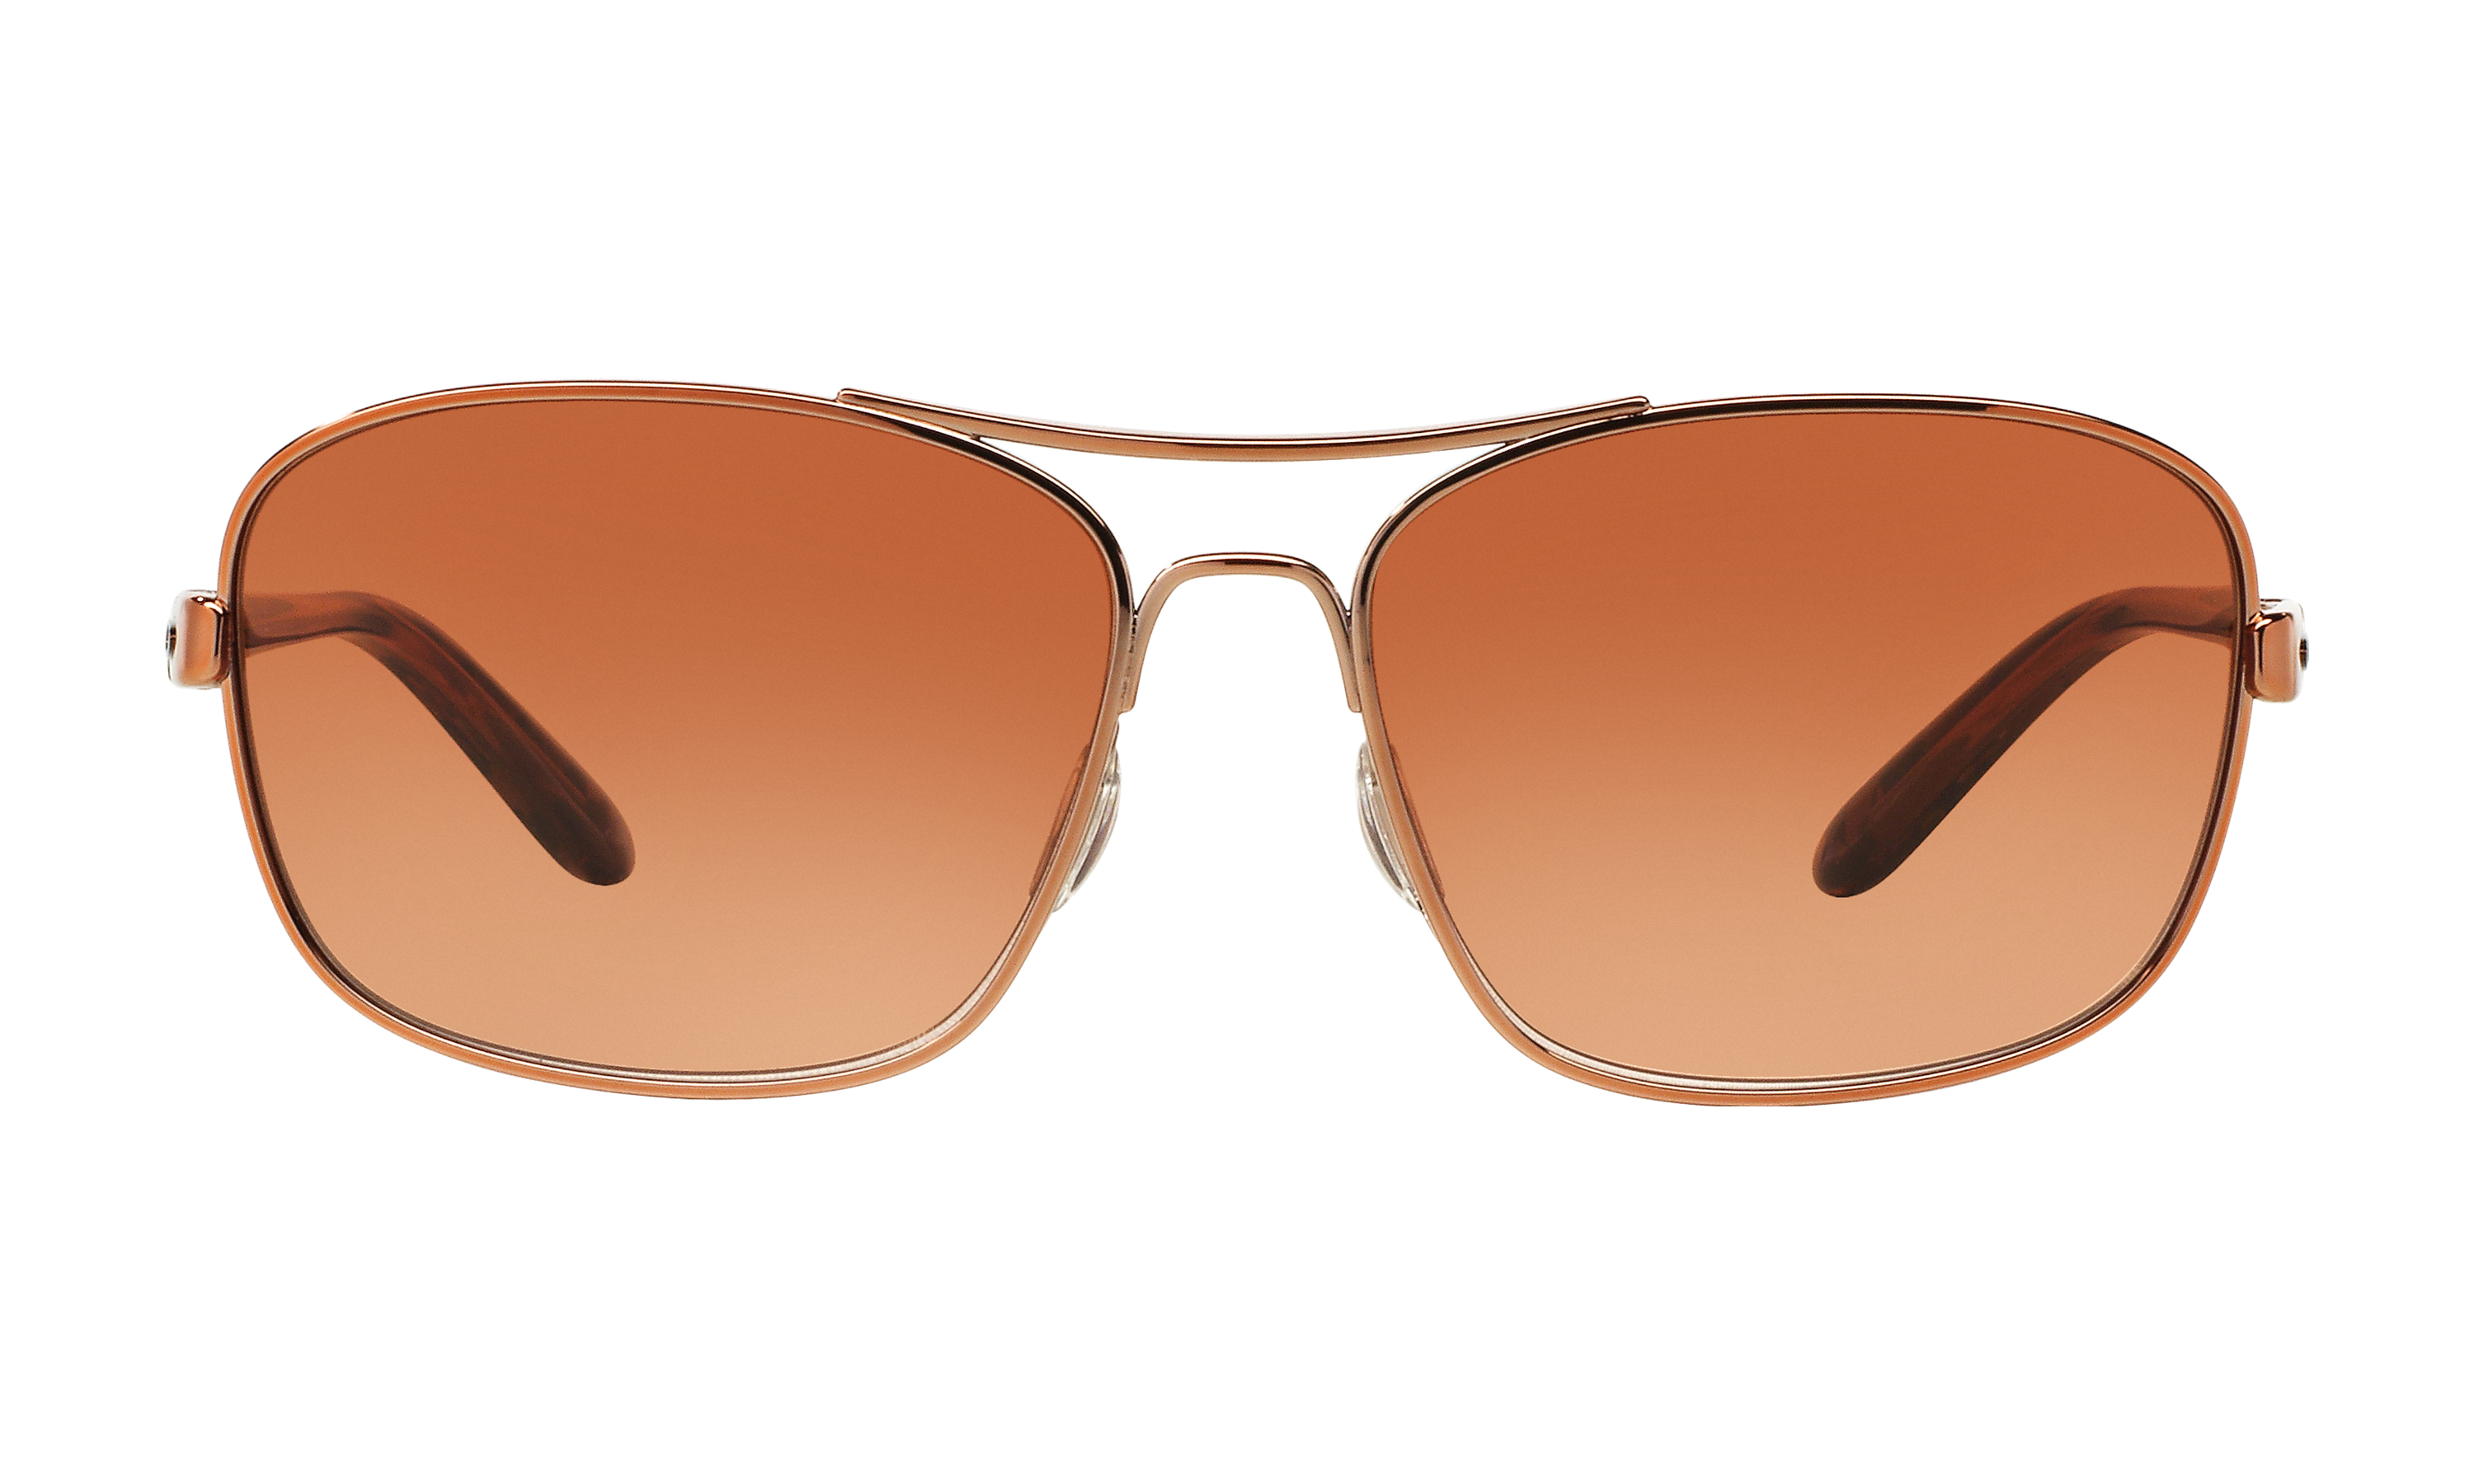 oakley sanctuary polarized sunglasses